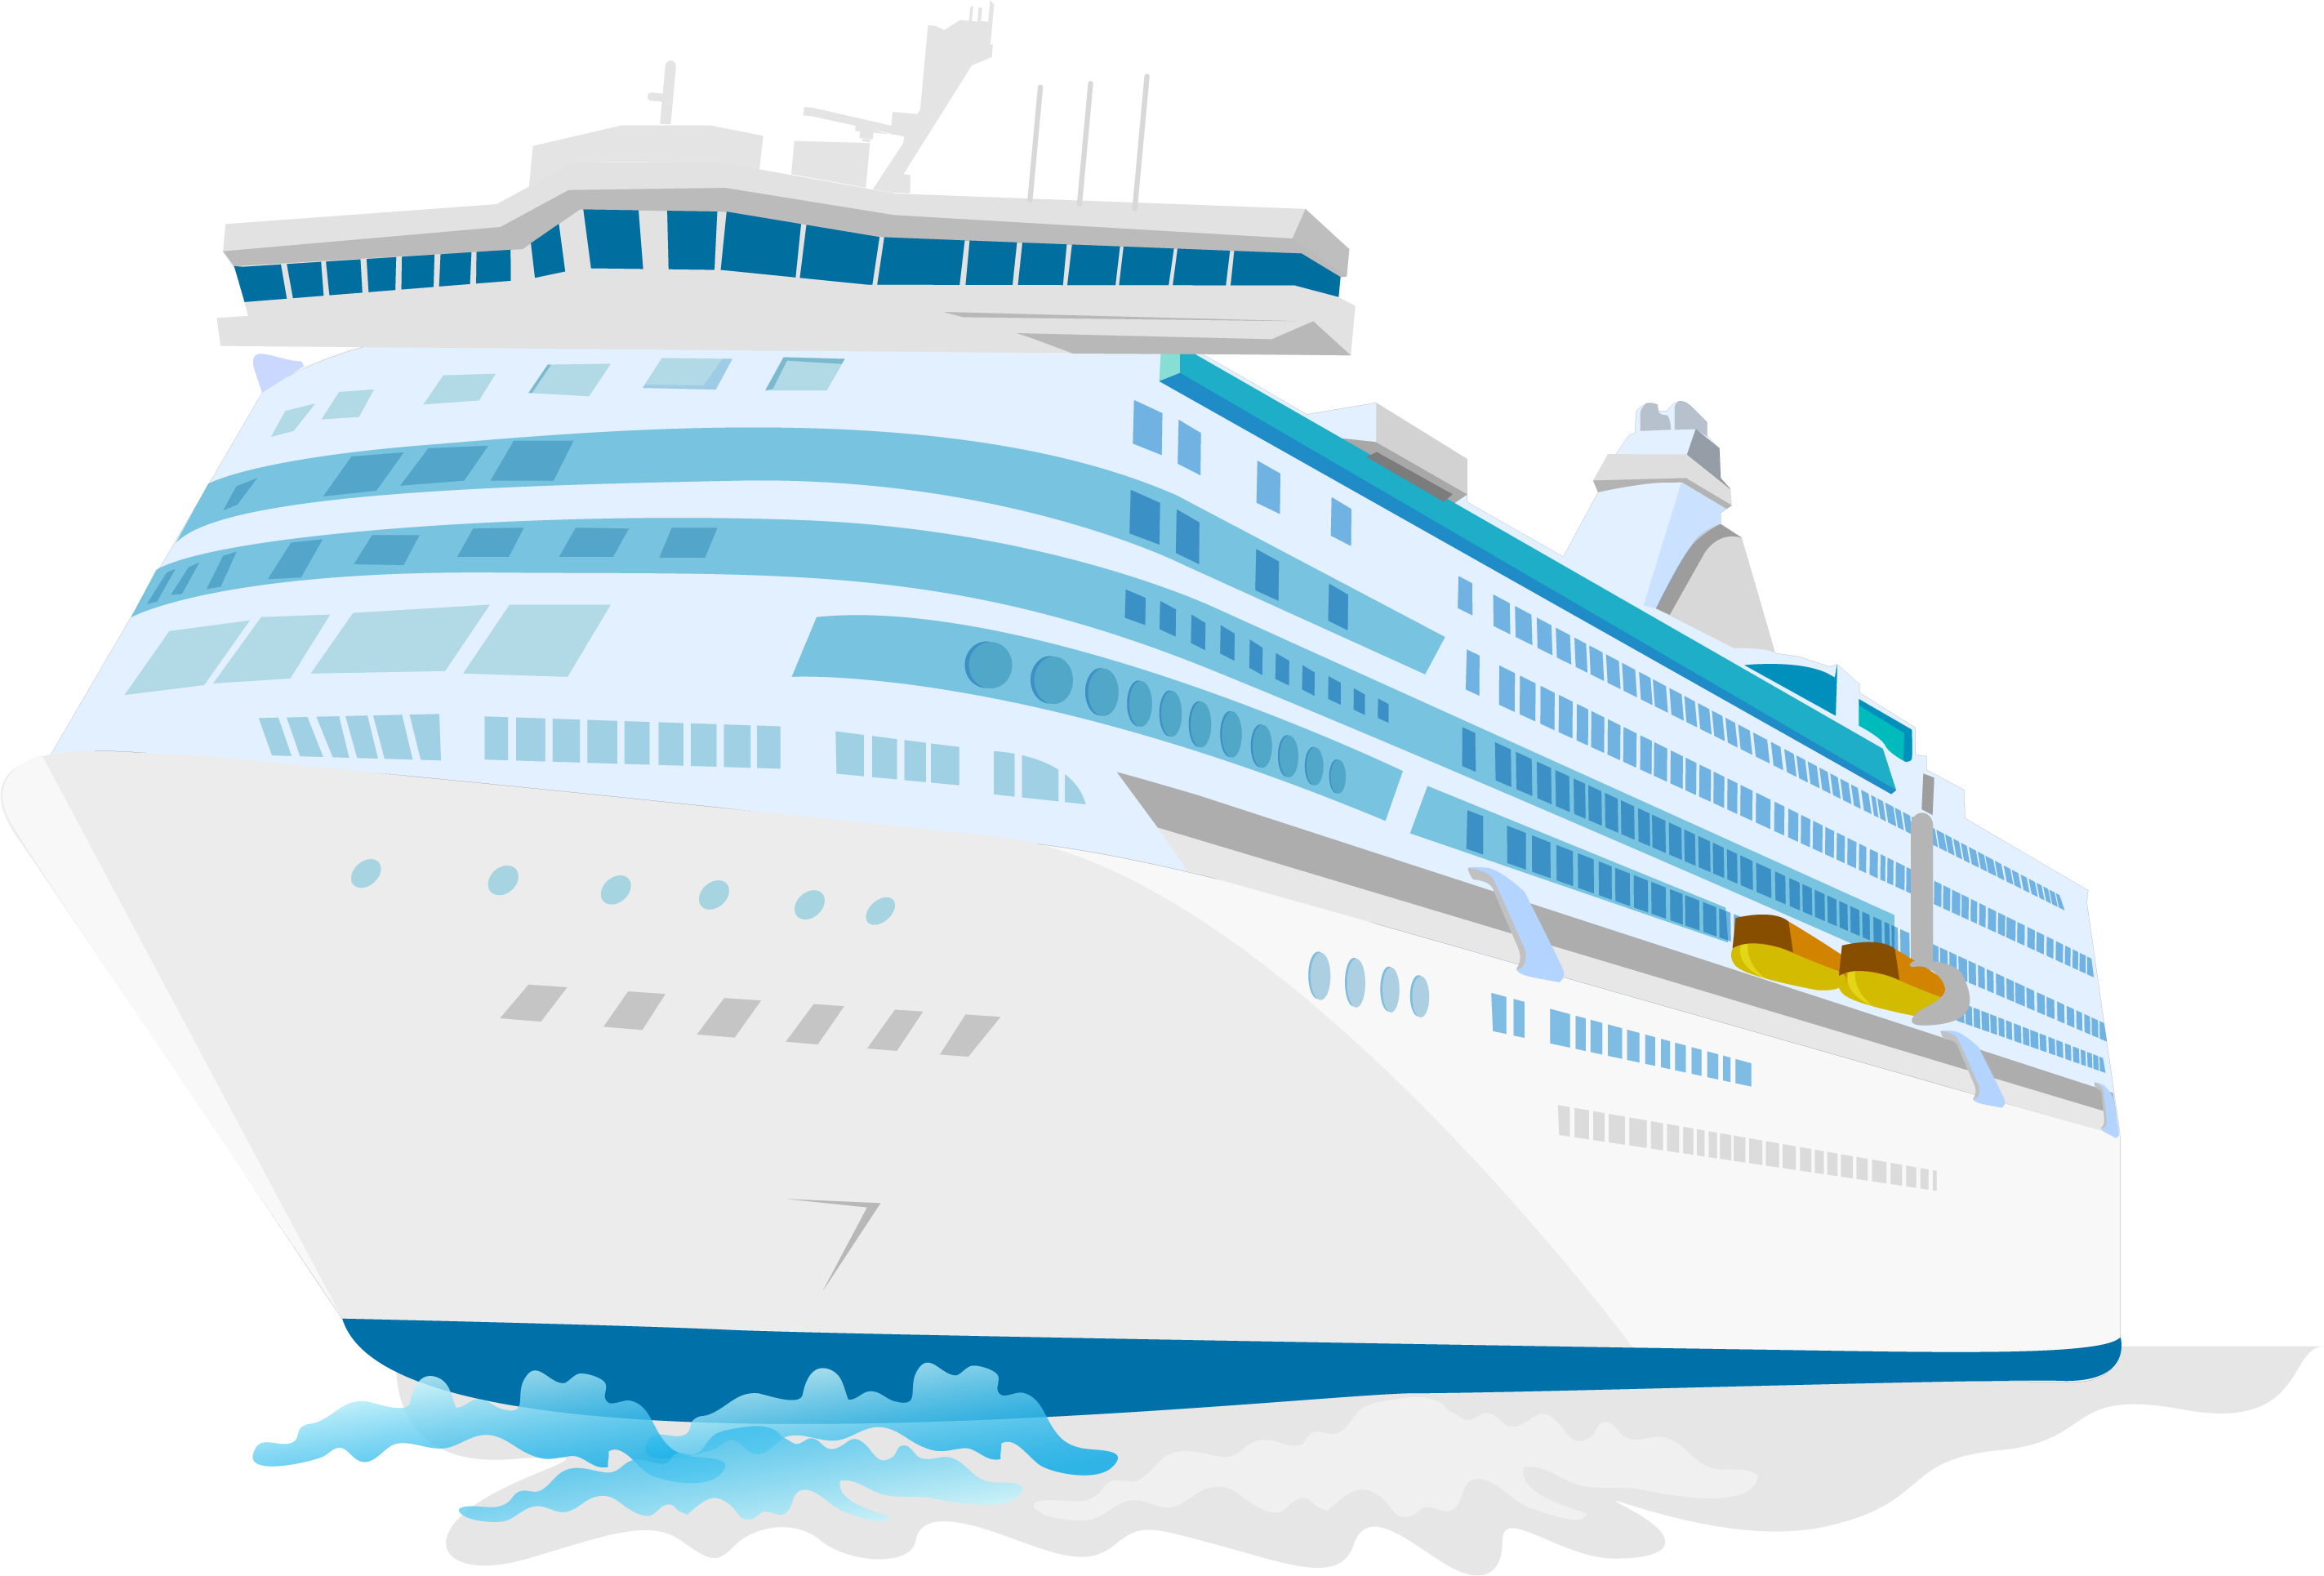 Modern Cruise Ship Illustration